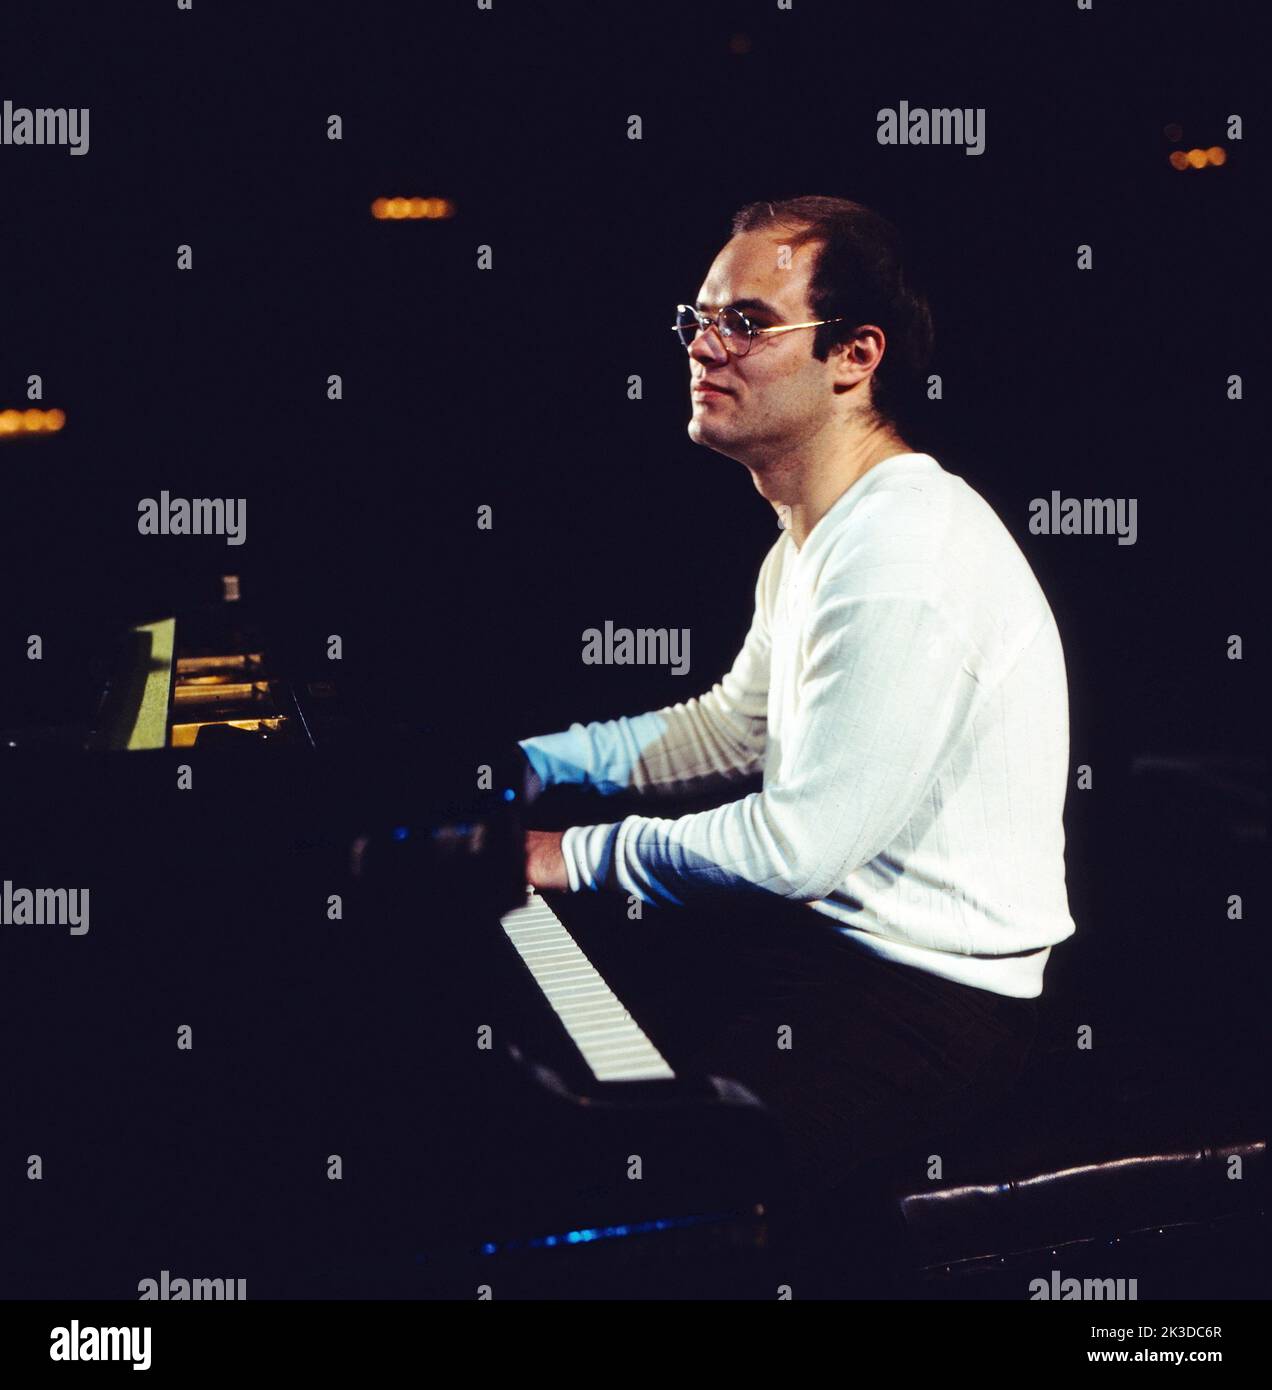 Christoph Spendel, deutscher Jazzpianiste und Komponist, Am Piano, Deutschland, vers 1988. Christoph Spendel, pianiste et compositeur allemand de jazz, sur le piano, Allemagne, vers 1988. Banque D'Images